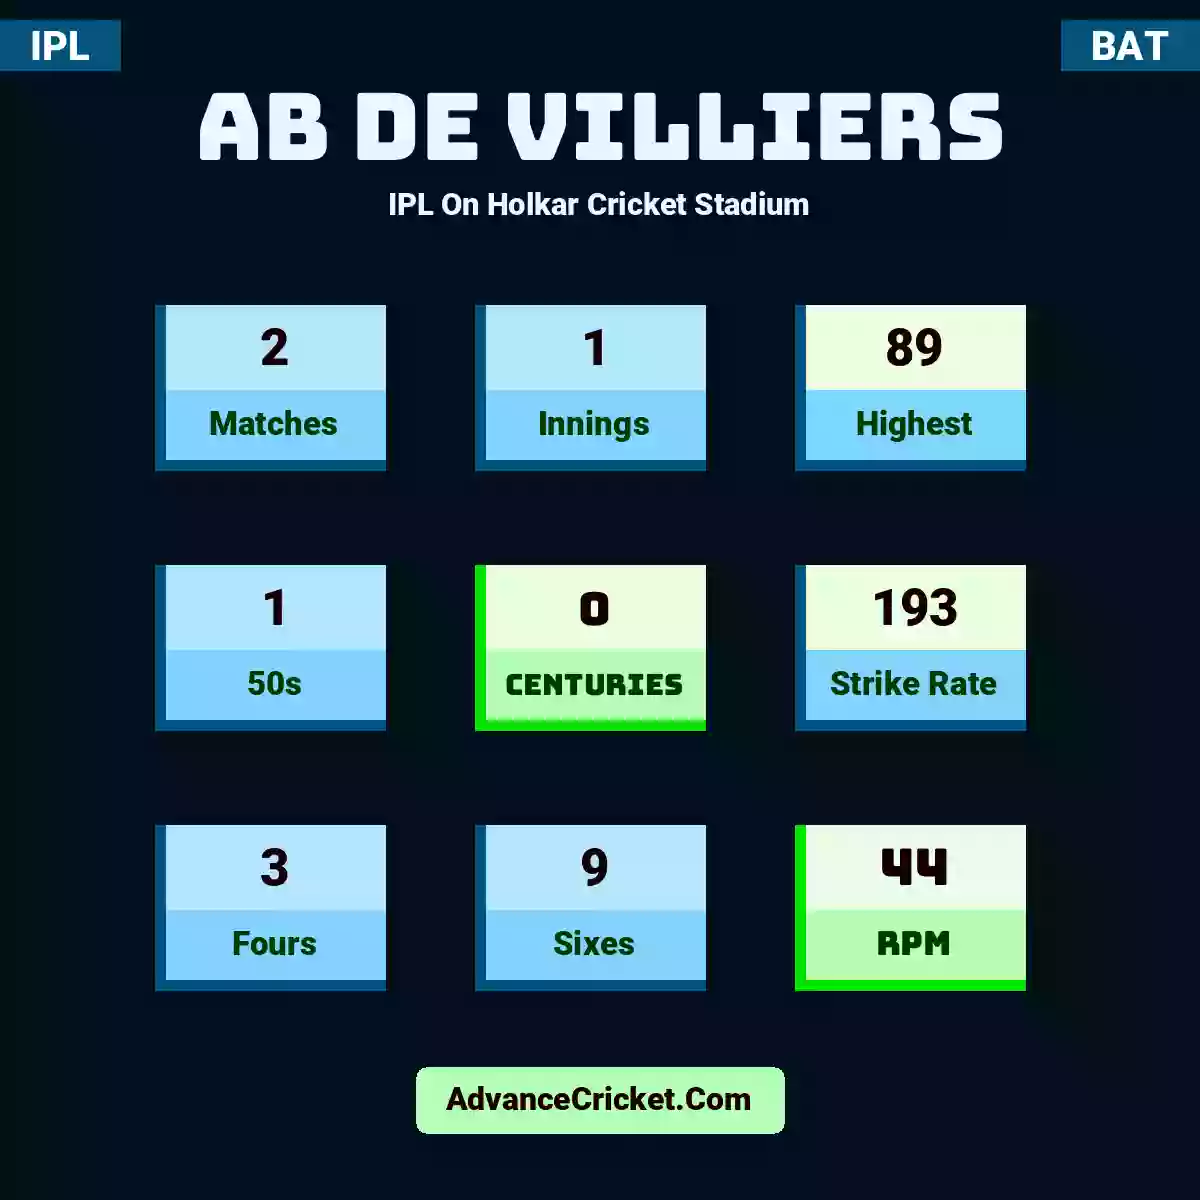 AB de Villiers IPL  On Holkar Cricket Stadium, AB de Villiers played 2 matches, scored 89 runs as highest, 1 half-centuries, and 0 centuries, with a strike rate of 193. A.Villiers hit 3 fours and 9 sixes, with an RPM of 44.